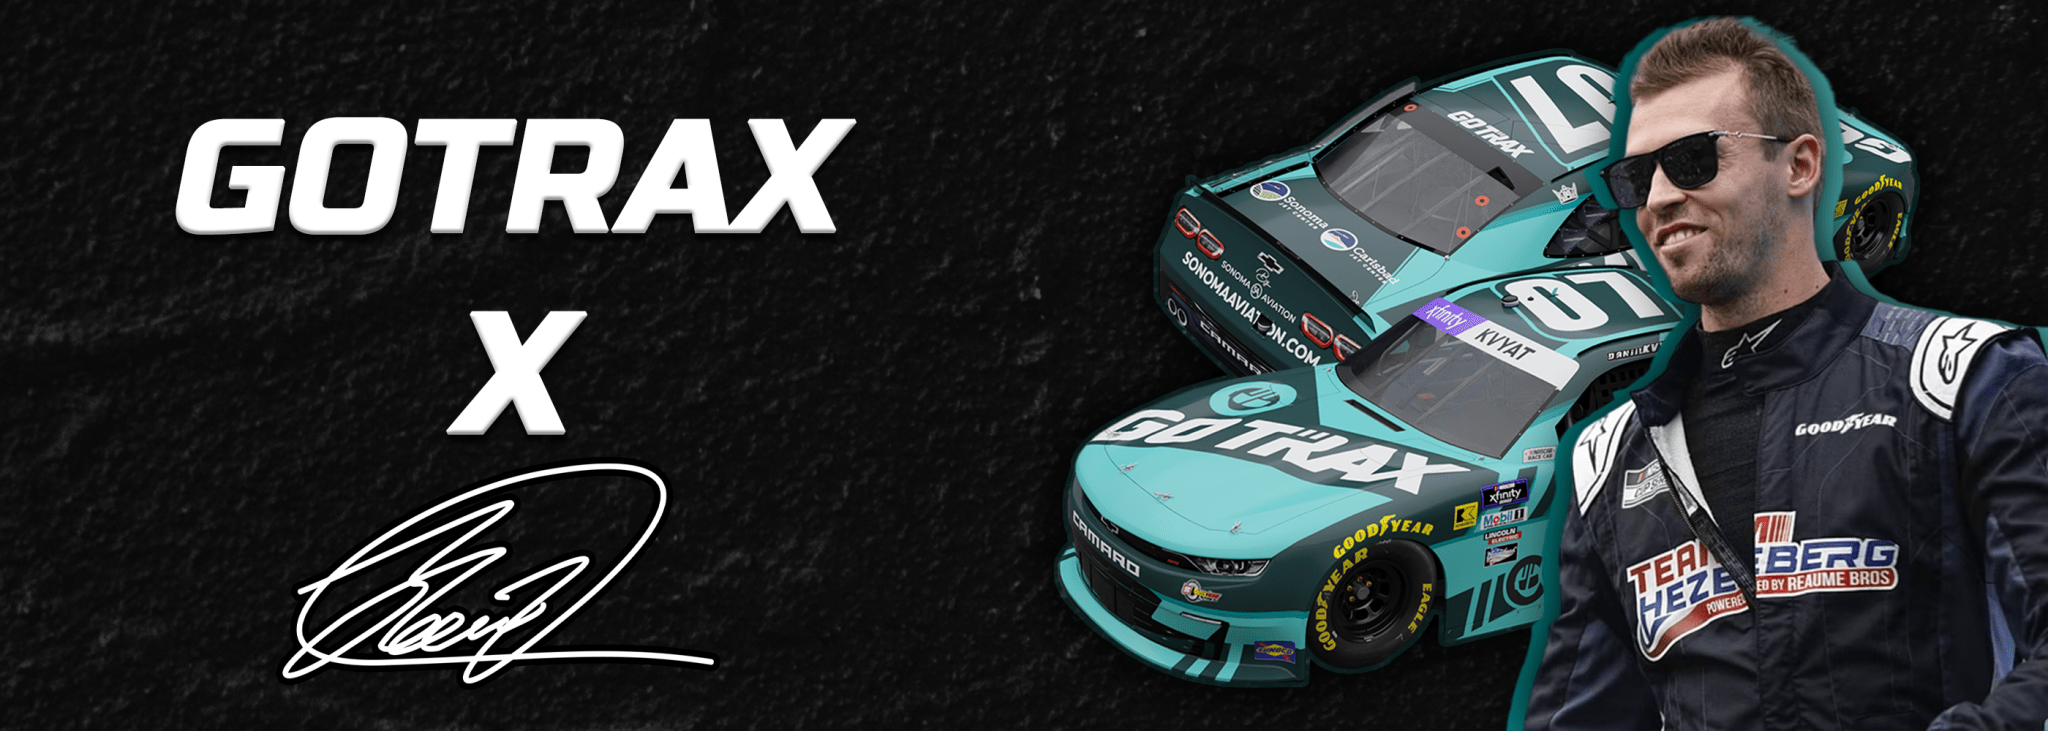 GOTRAX Is Partnering with Daniil Kvyat for NASCAR at COTA - GOTRAX